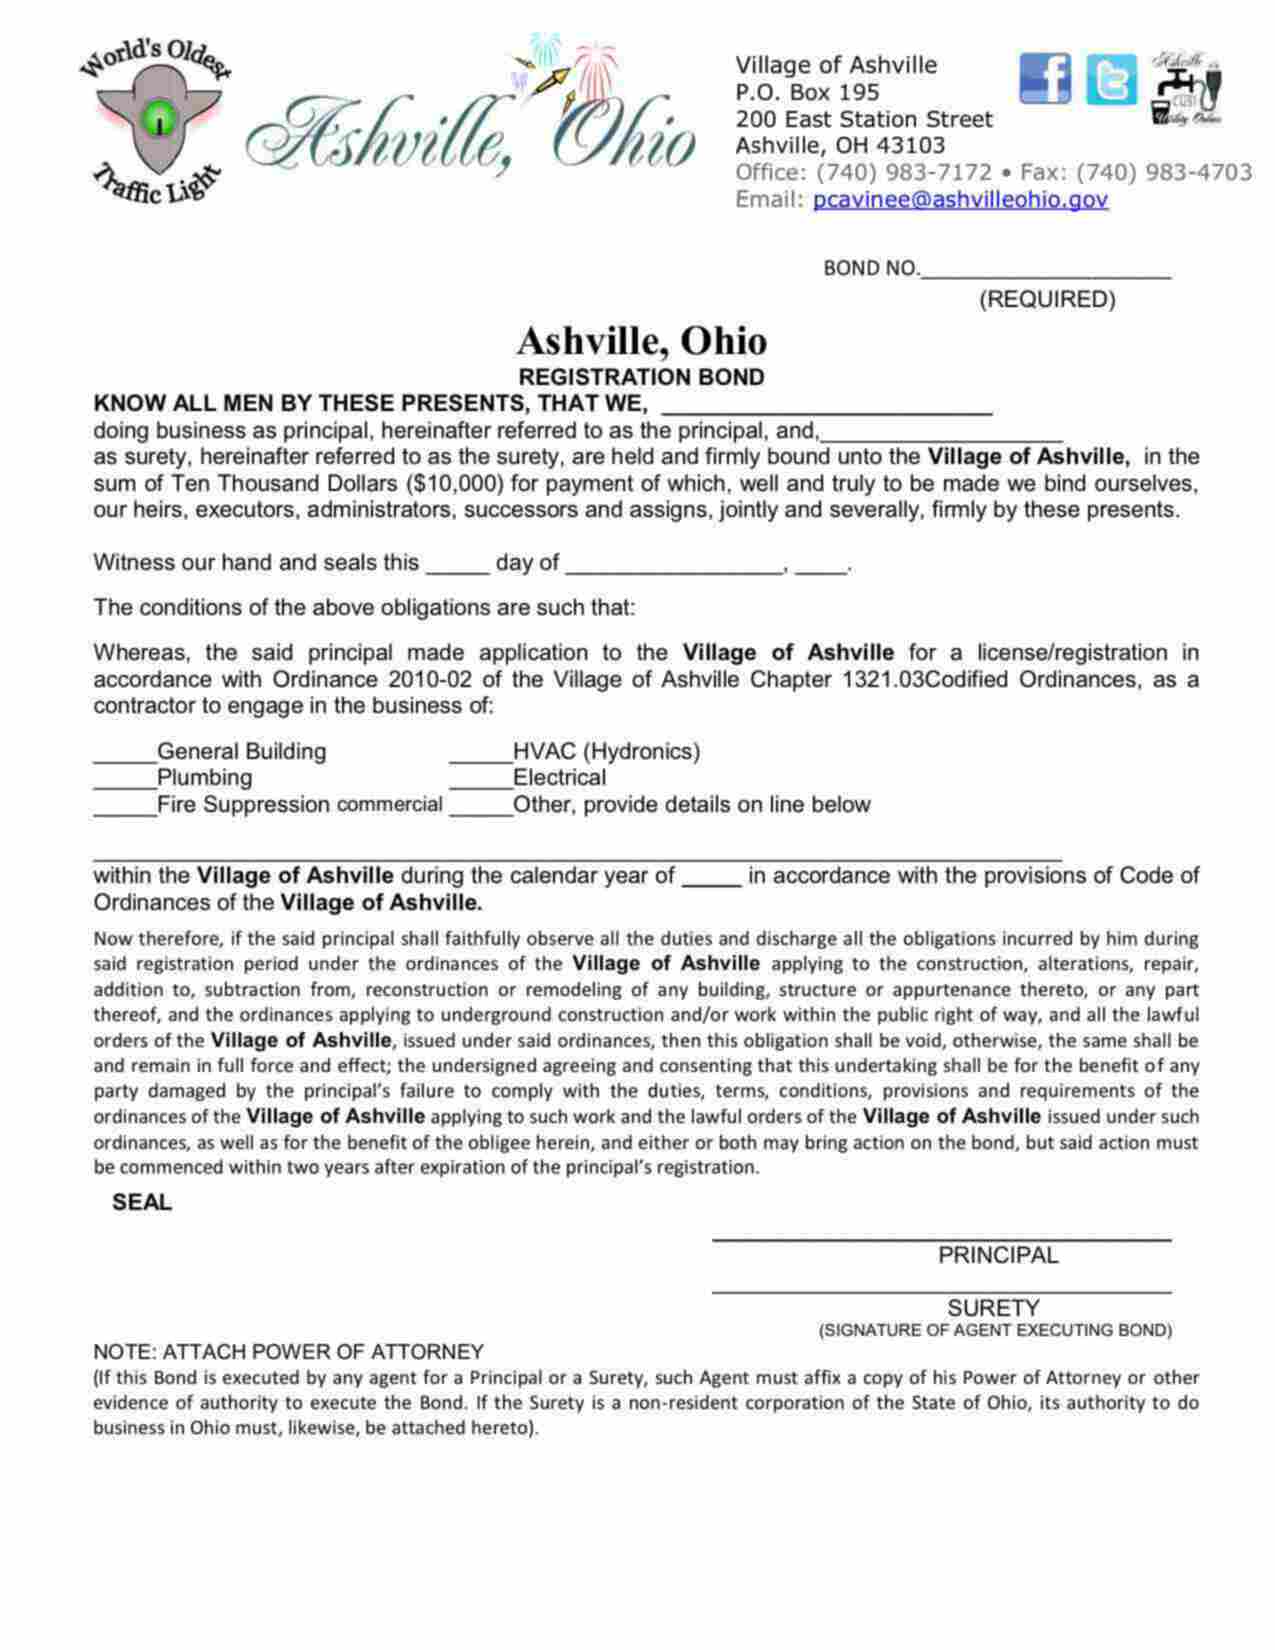 Ohio Registration - Electrical Bond Form